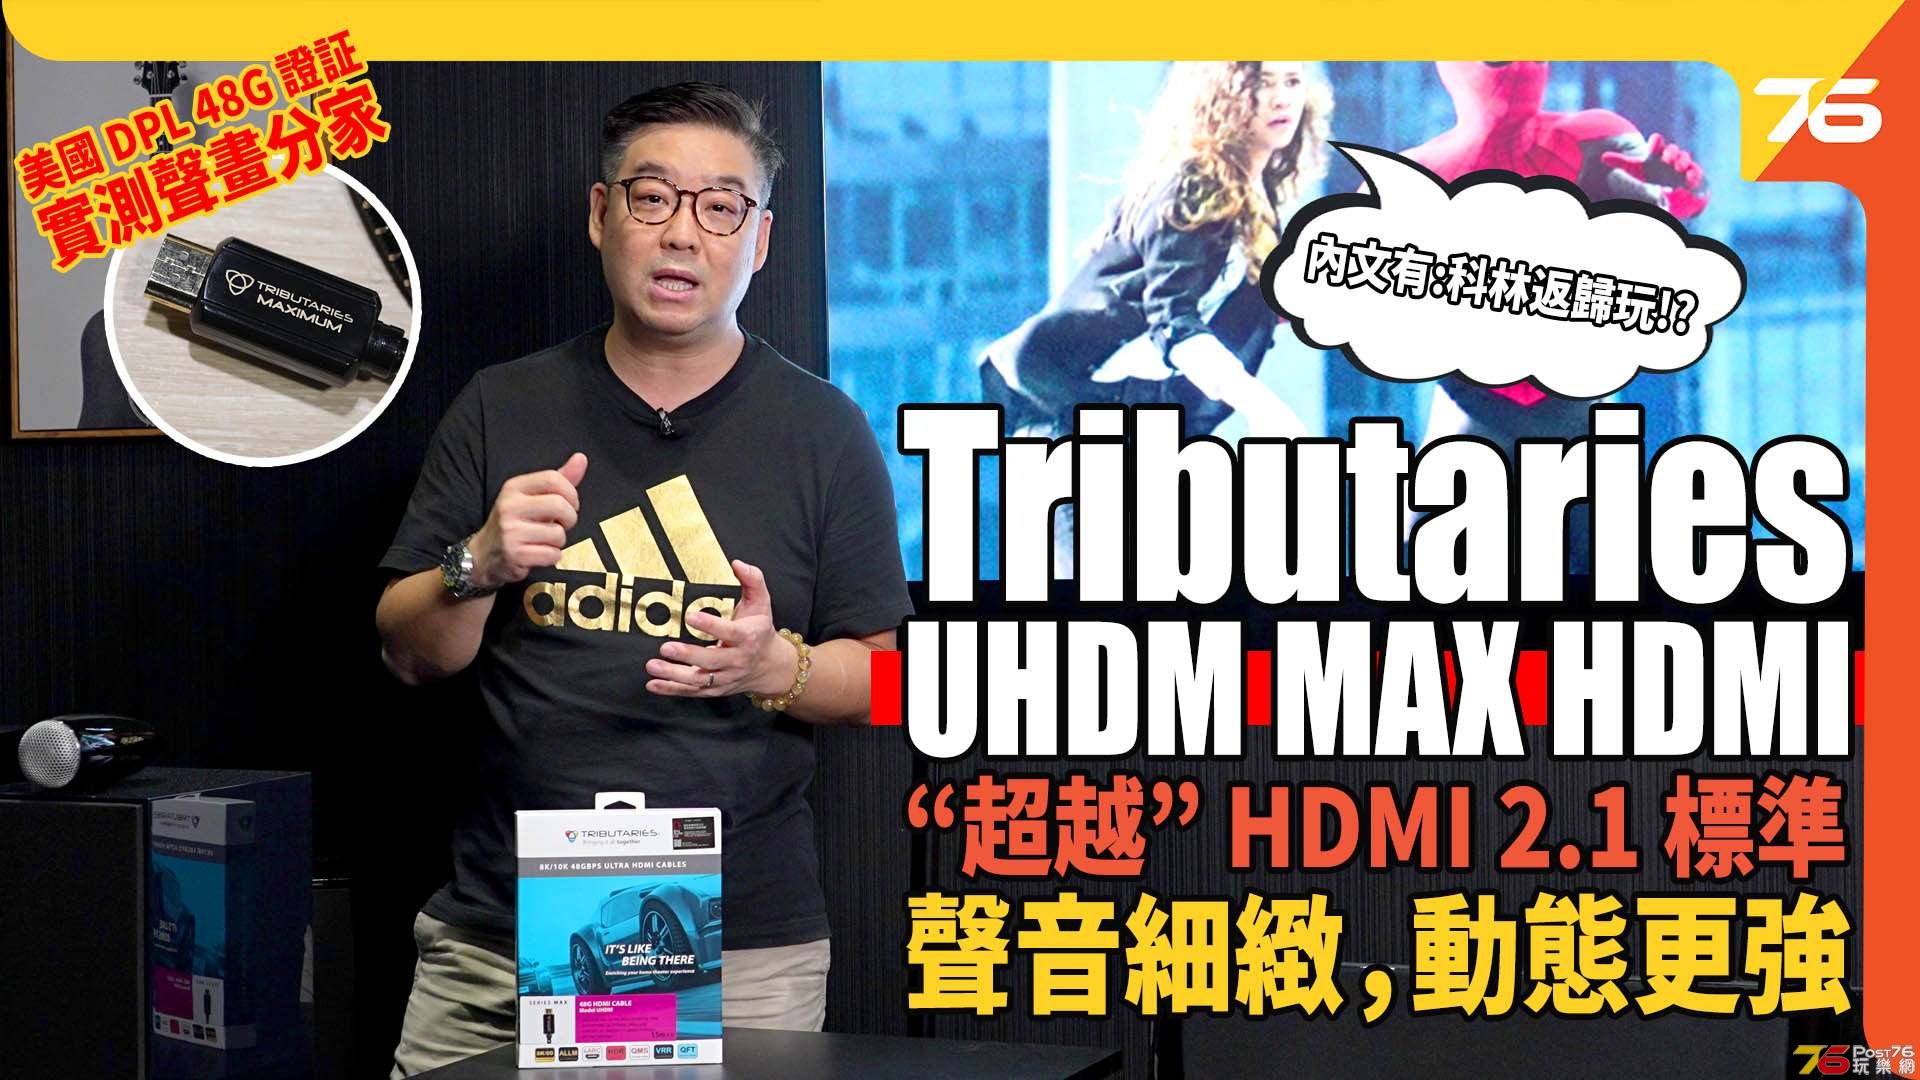 Tributaries UHDM MAX HDMI review YT1 copy.jpg